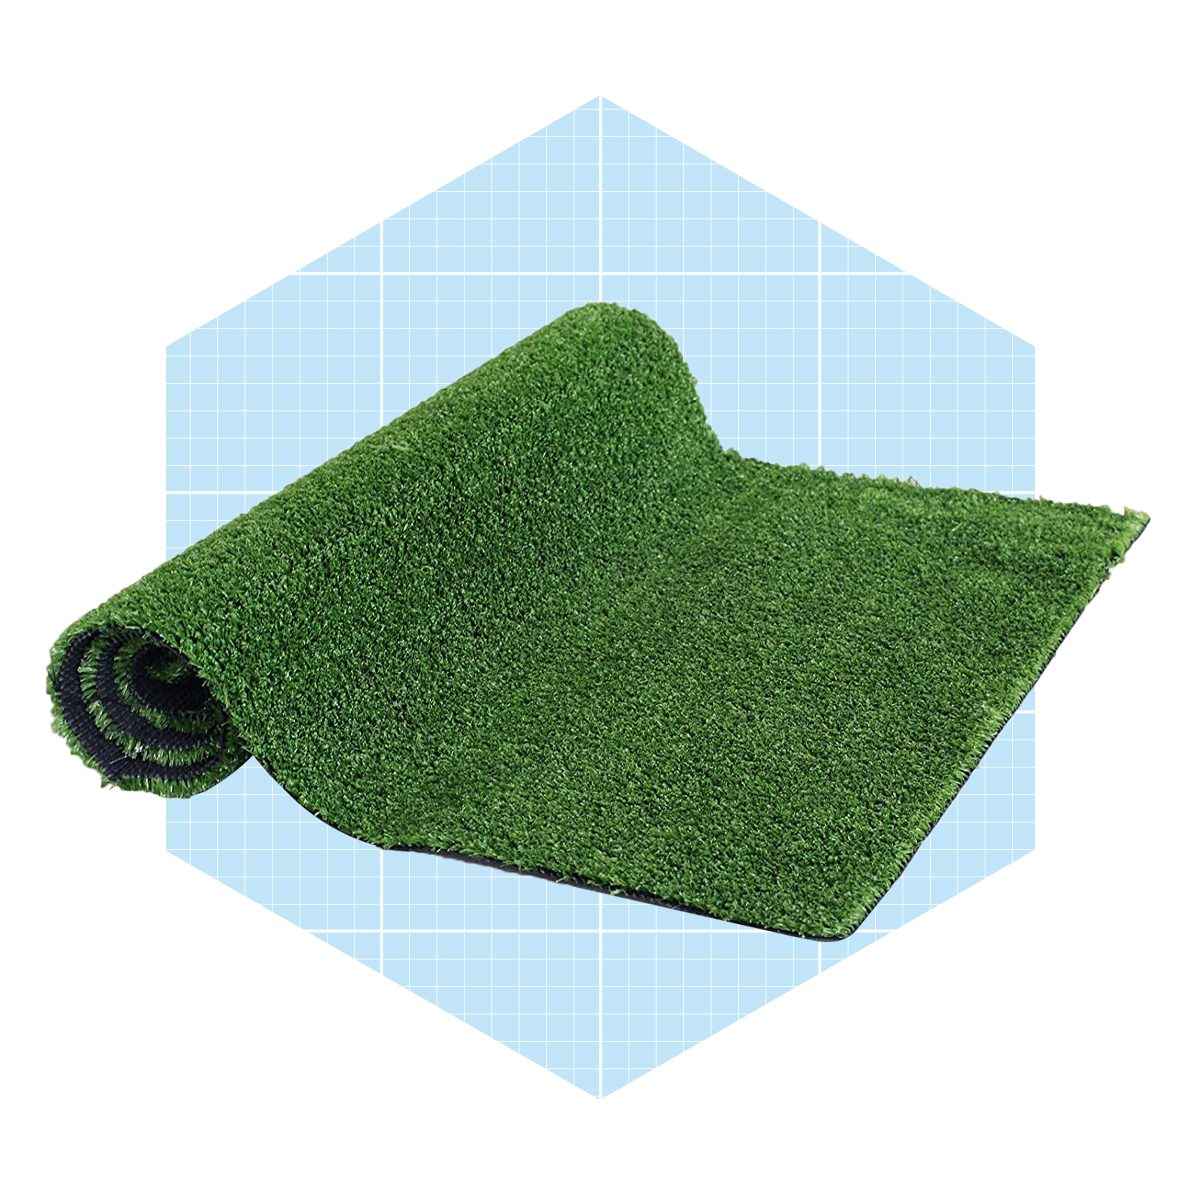 Goasis Lawn Artificial Grass Turf Lawn Ecomm Amazon.com